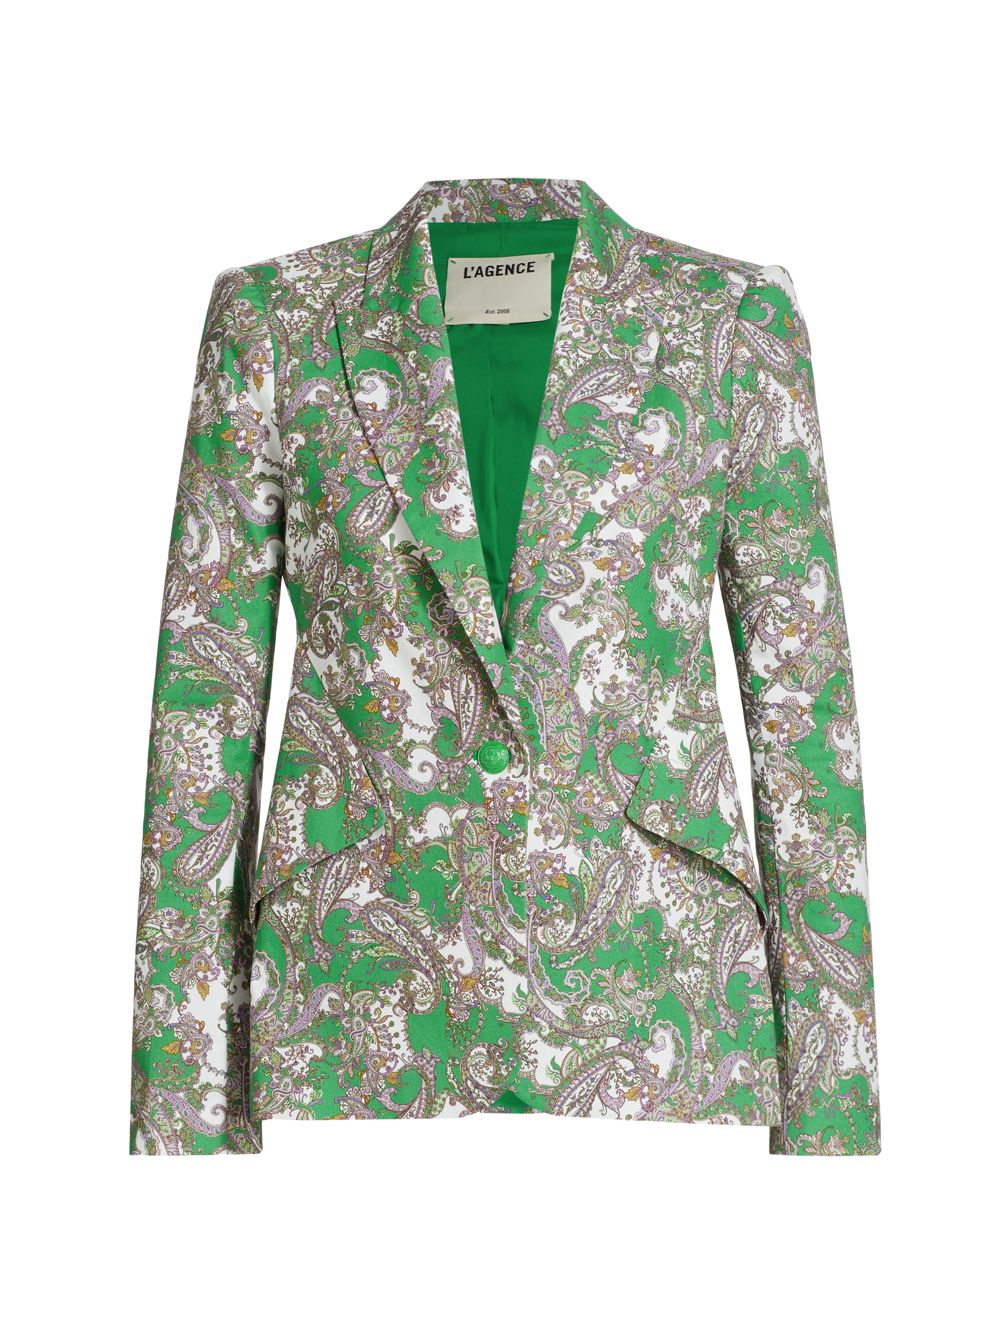 Пиджак Chamberlain из эластичного хлопка L'AGENCE, зеленый